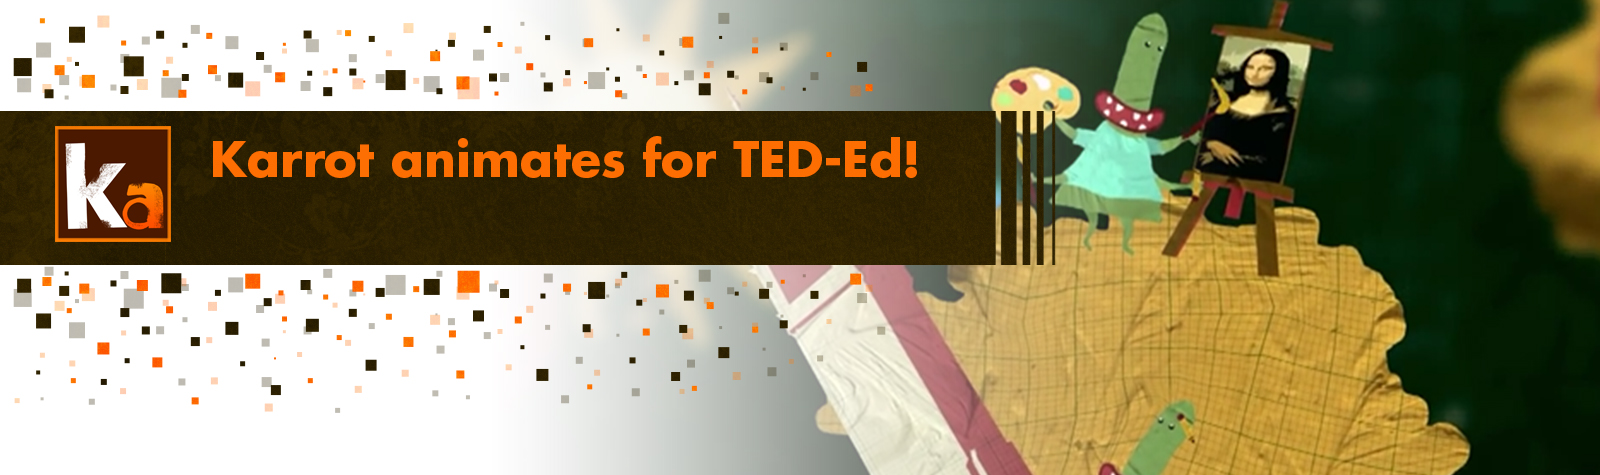 Karrot animates for TED-Ed!